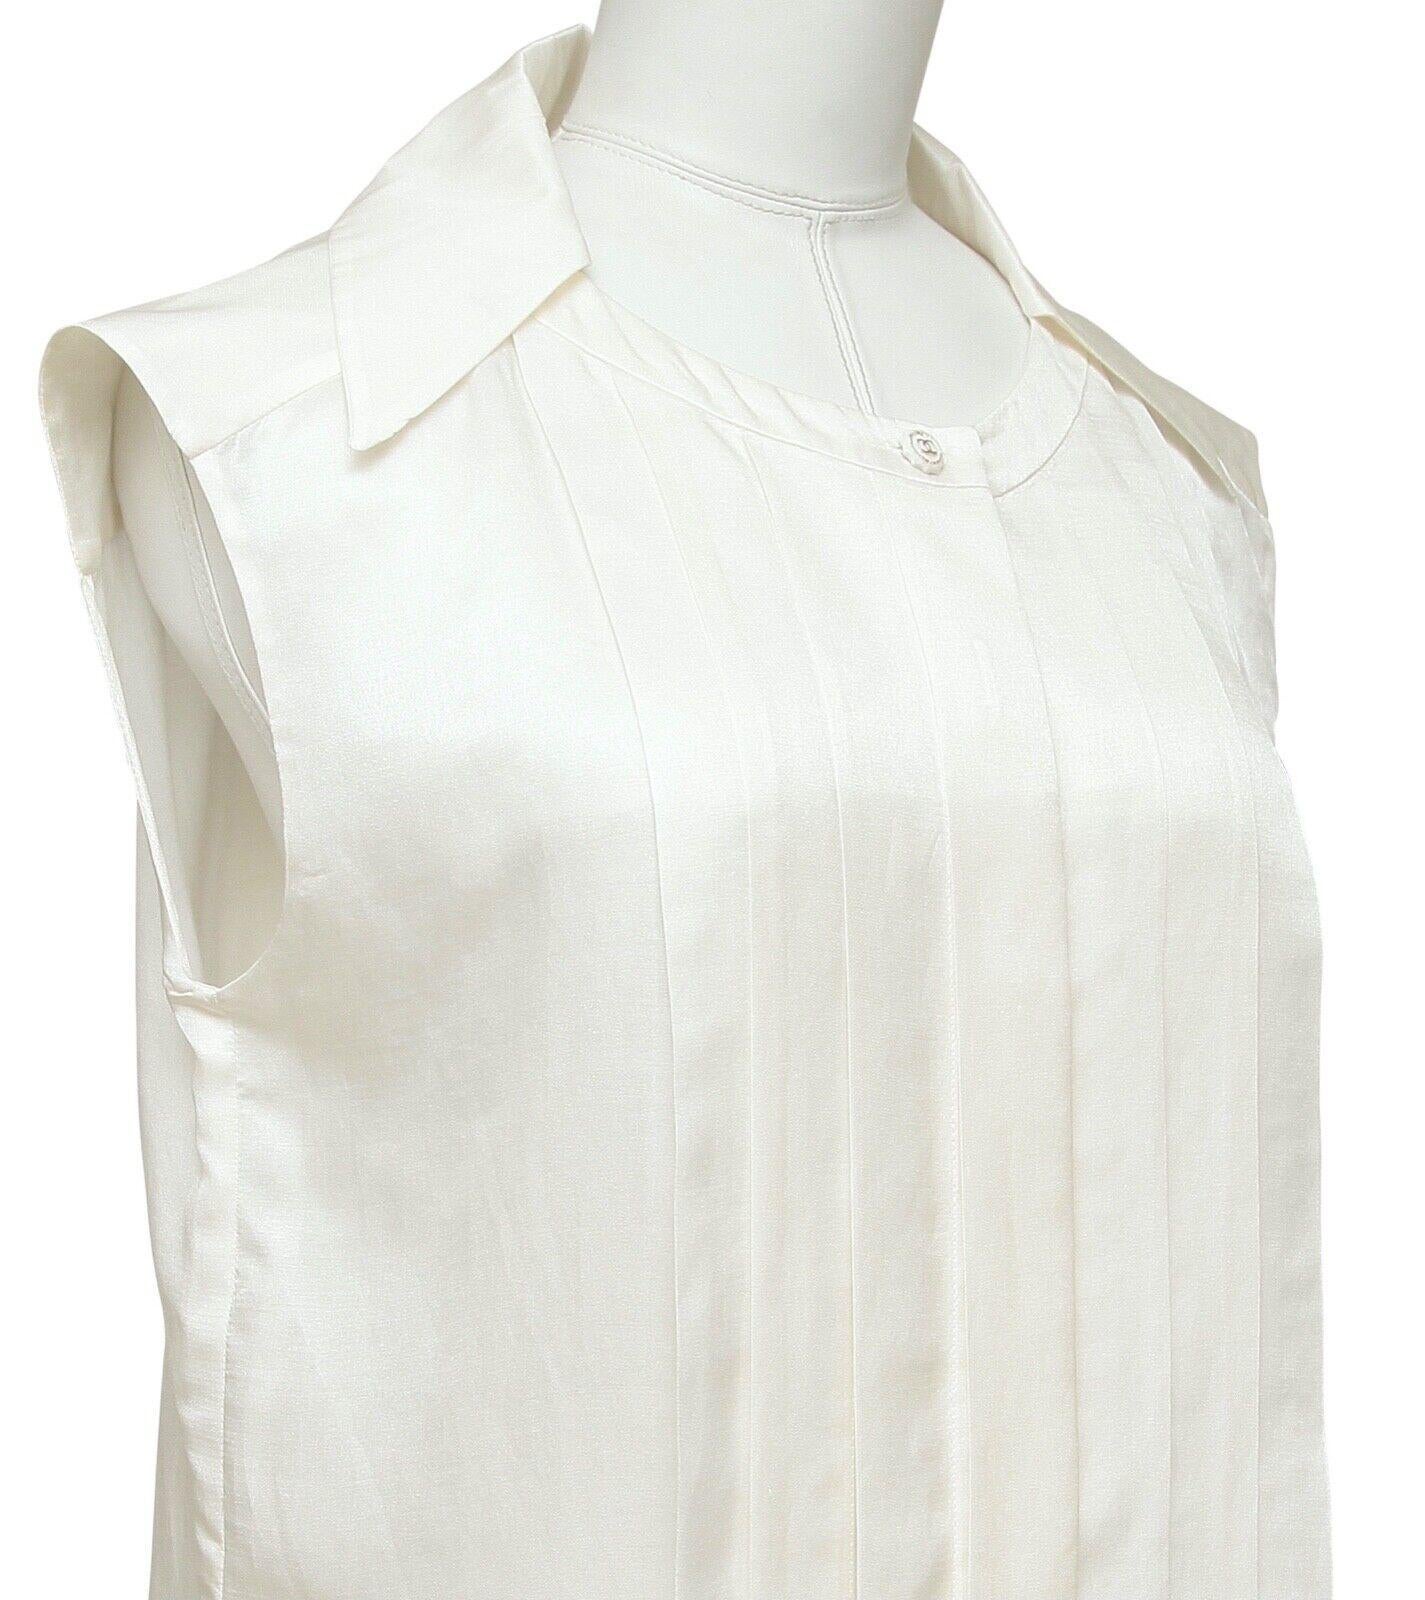 CHANEL Sleeveless Blouse Top Shirt Ivory Ecru Cotton Silk Pleats Collar Sz 44 2